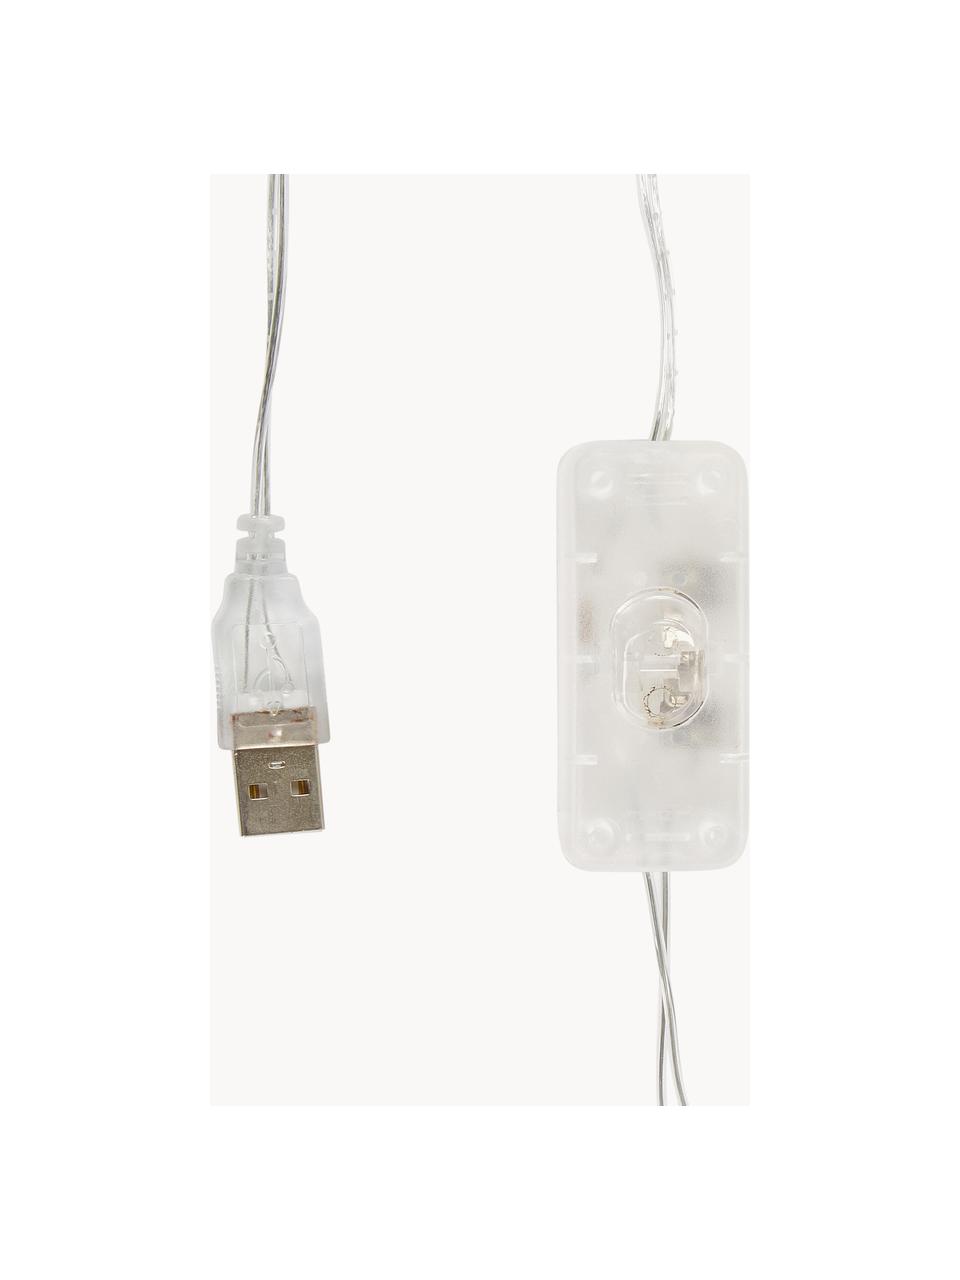 Ghirlanda a LED Colorain, 378 cm, Lanterne: poliestere certificato WF, Bianco, tonalità beige, tonalità marroni, Lung. 378 cm